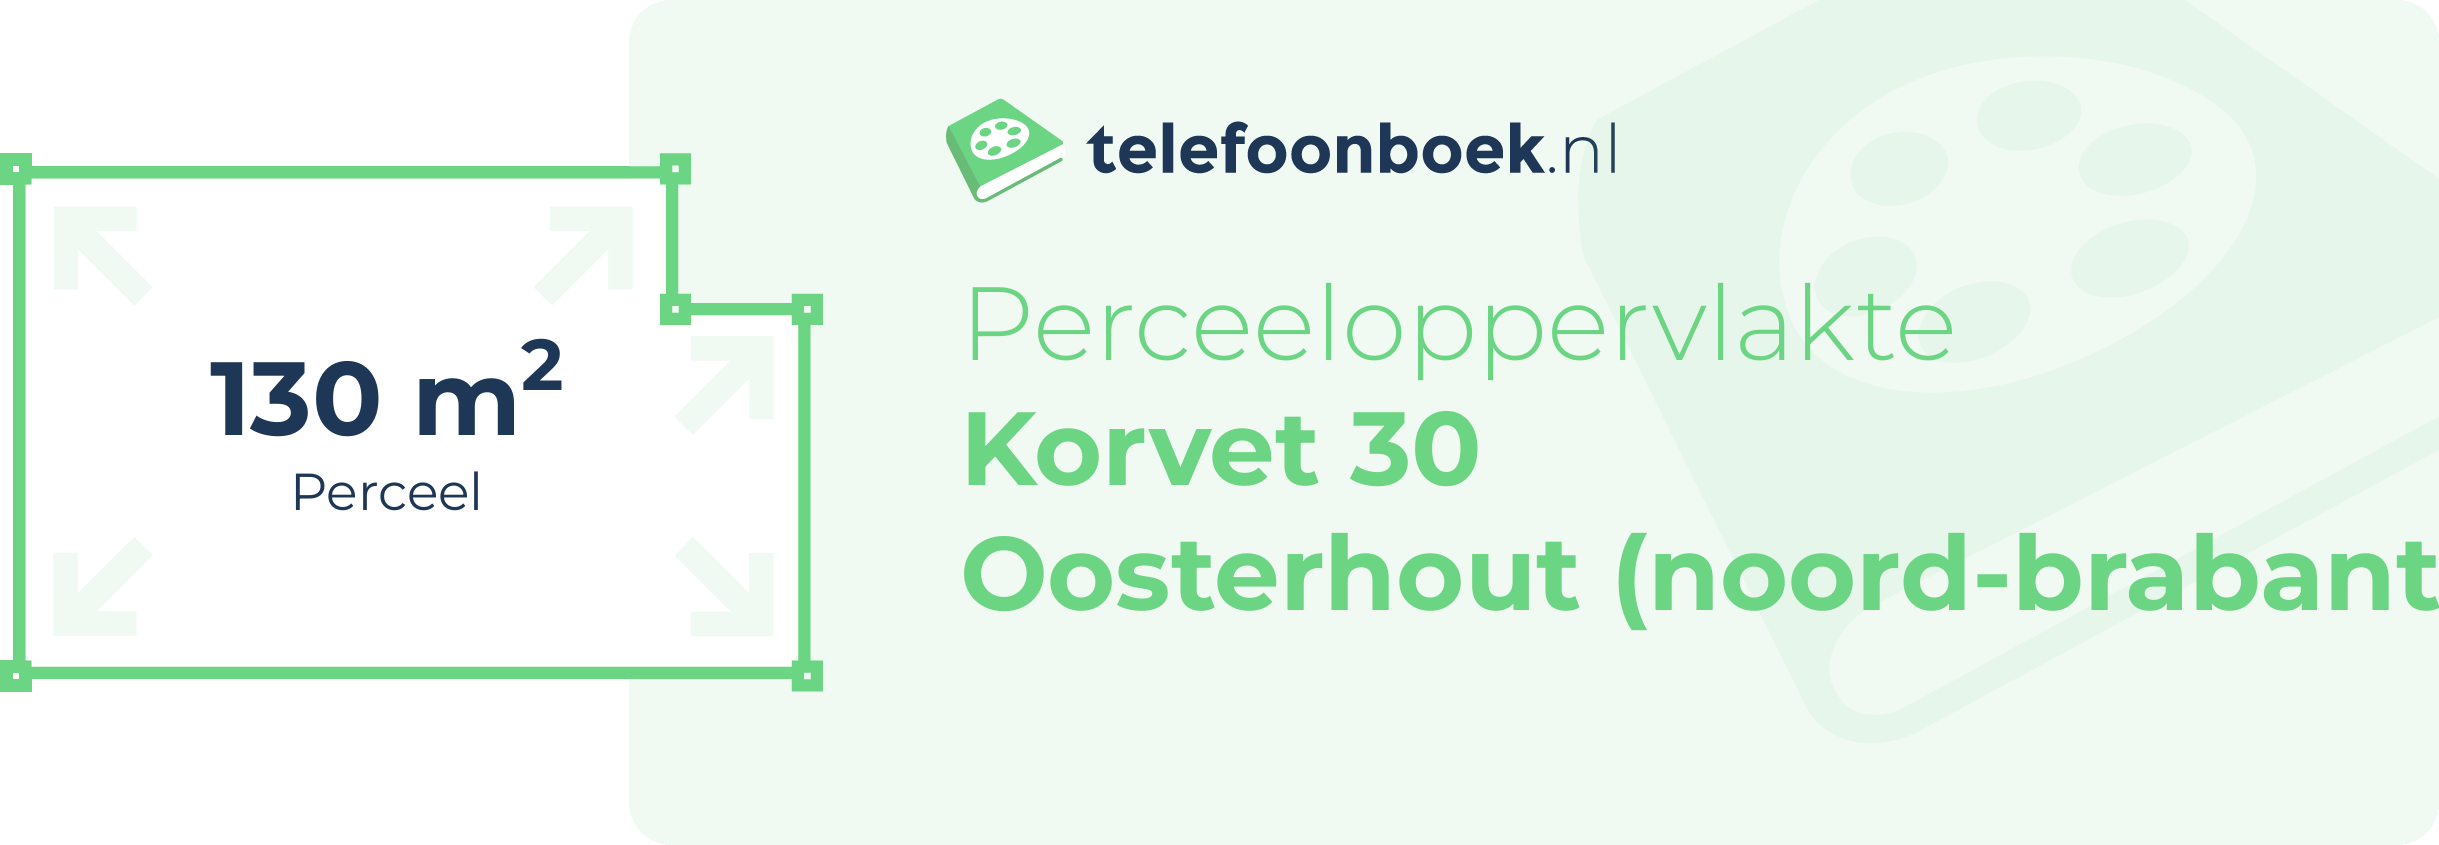 Perceeloppervlakte Korvet 30 Oosterhout (Noord-Brabant)